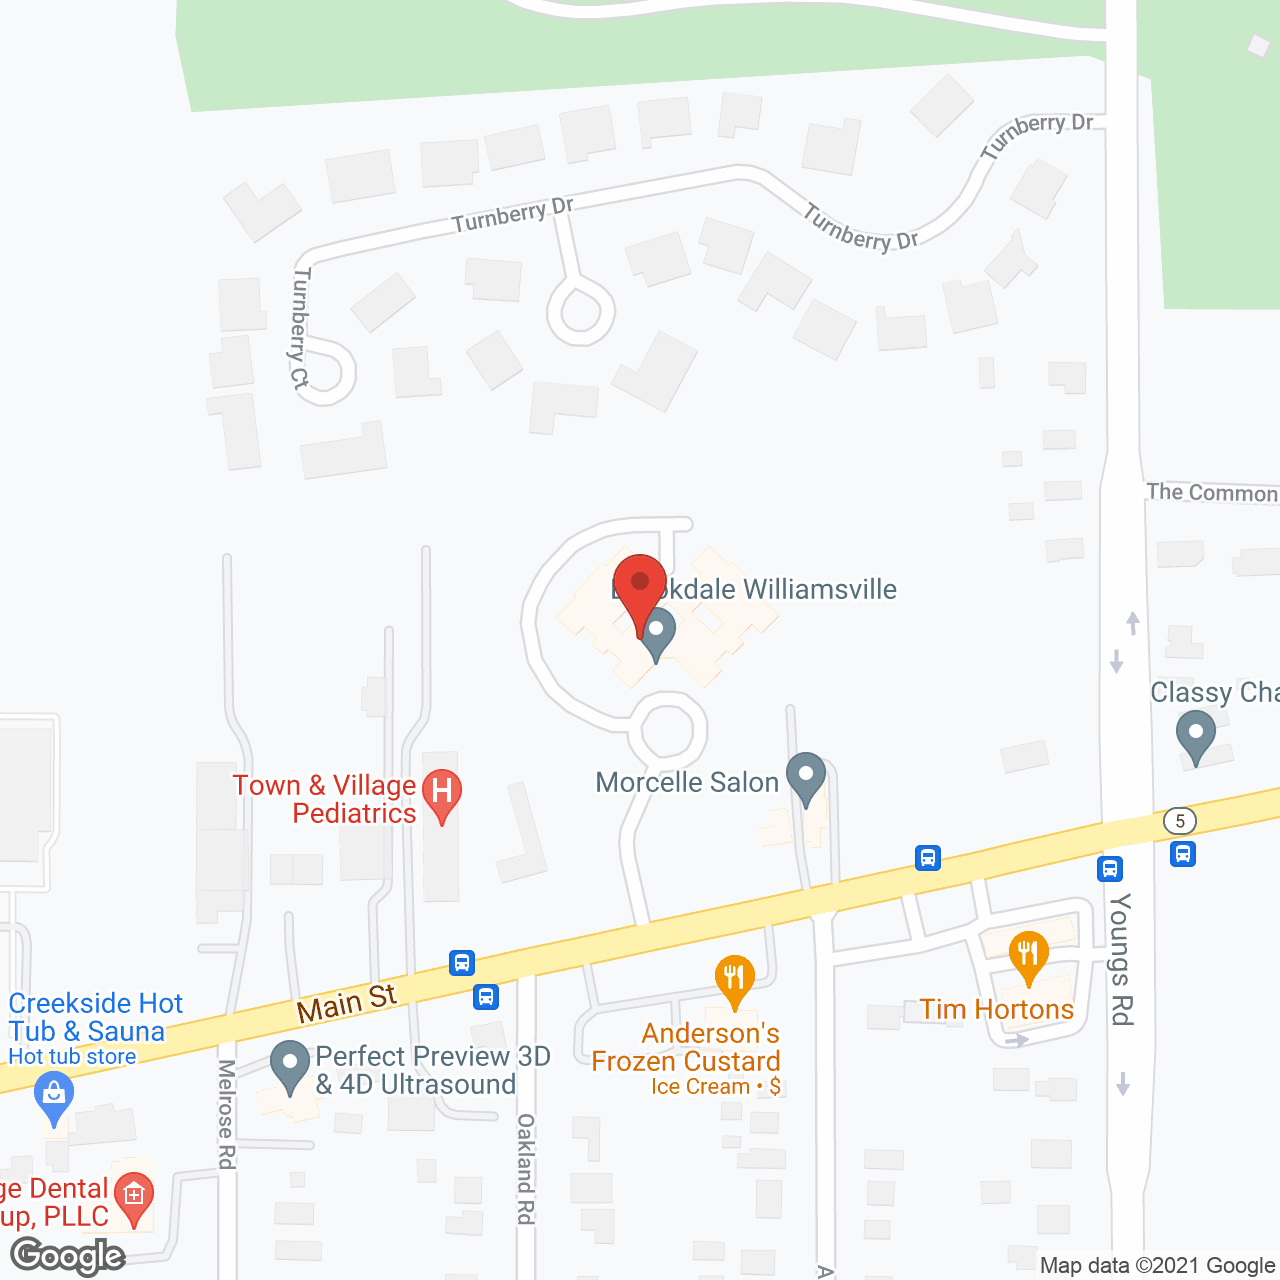 Brookdale Williamsville in google map